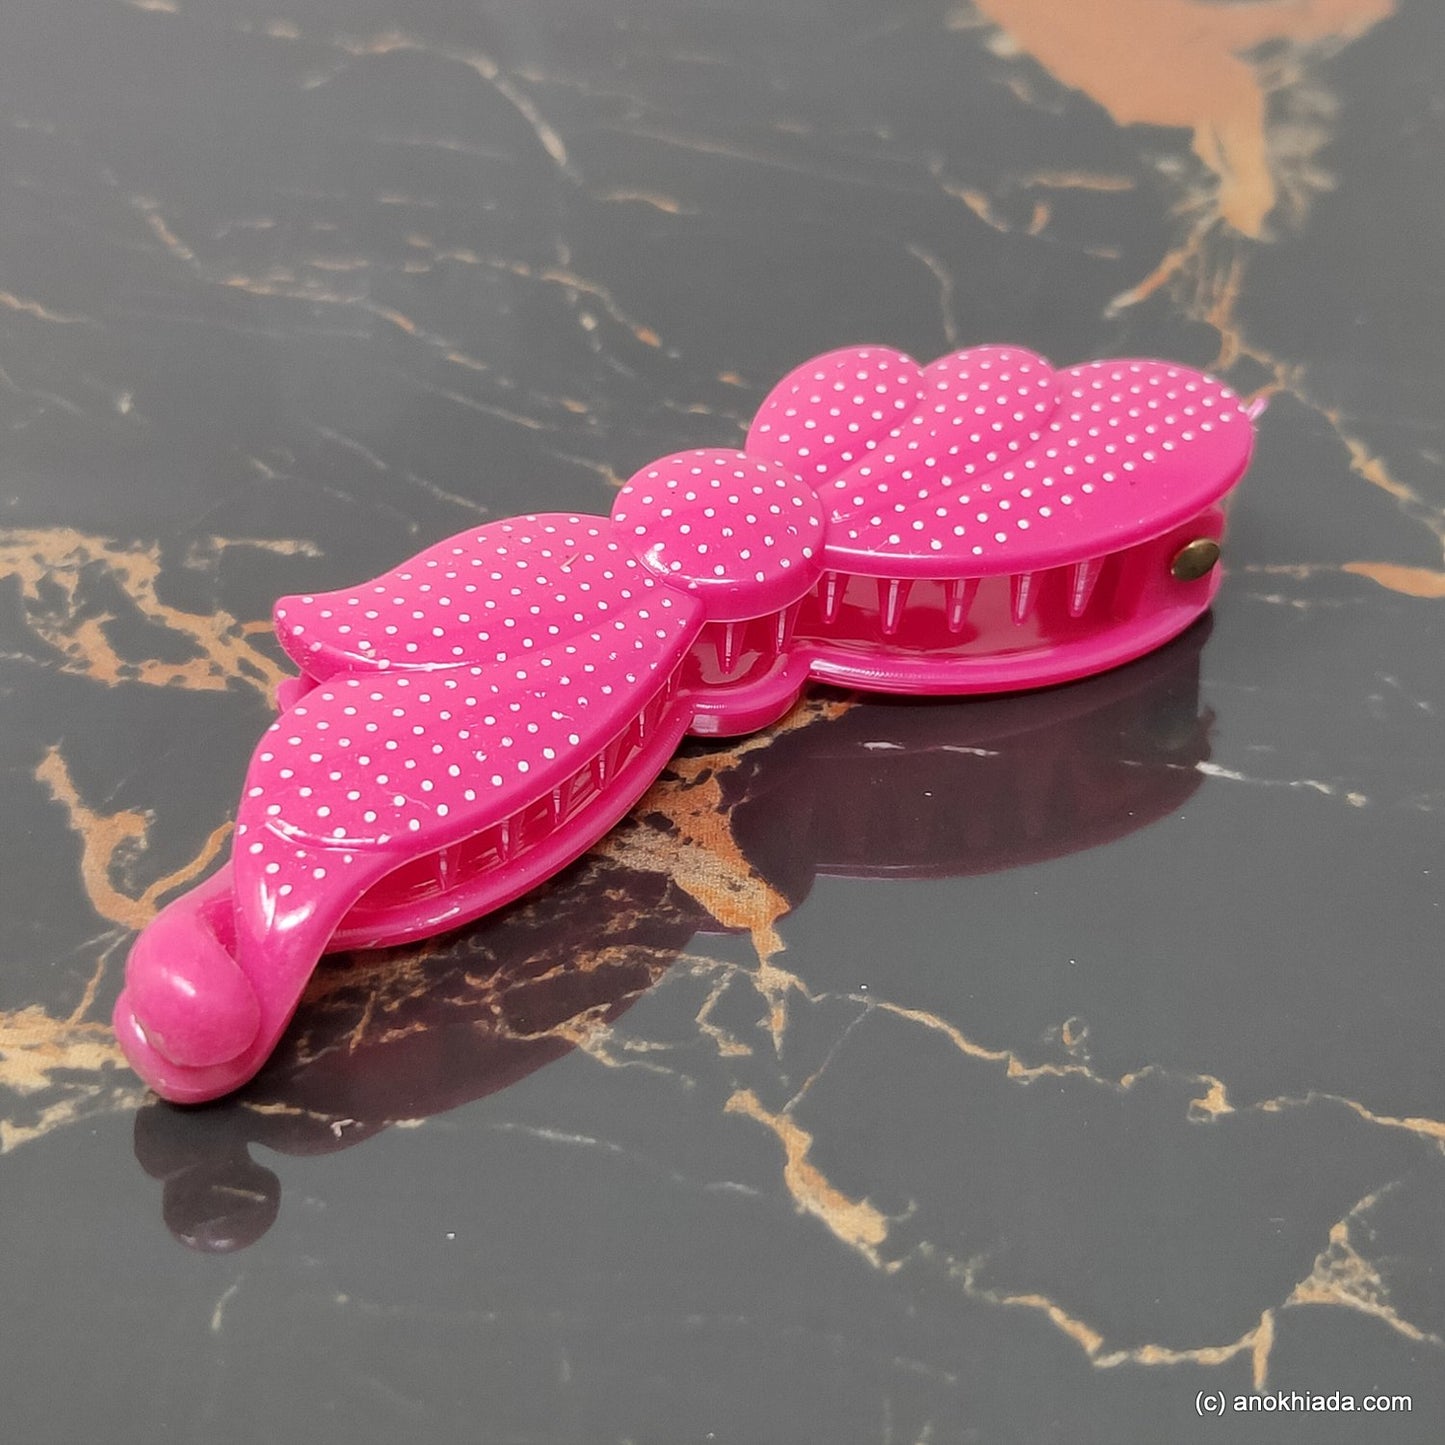 Butterfly Design Small Hot Pink Banana Hair Clip for Girls & Woman (98-16l Banana Hair Clips)